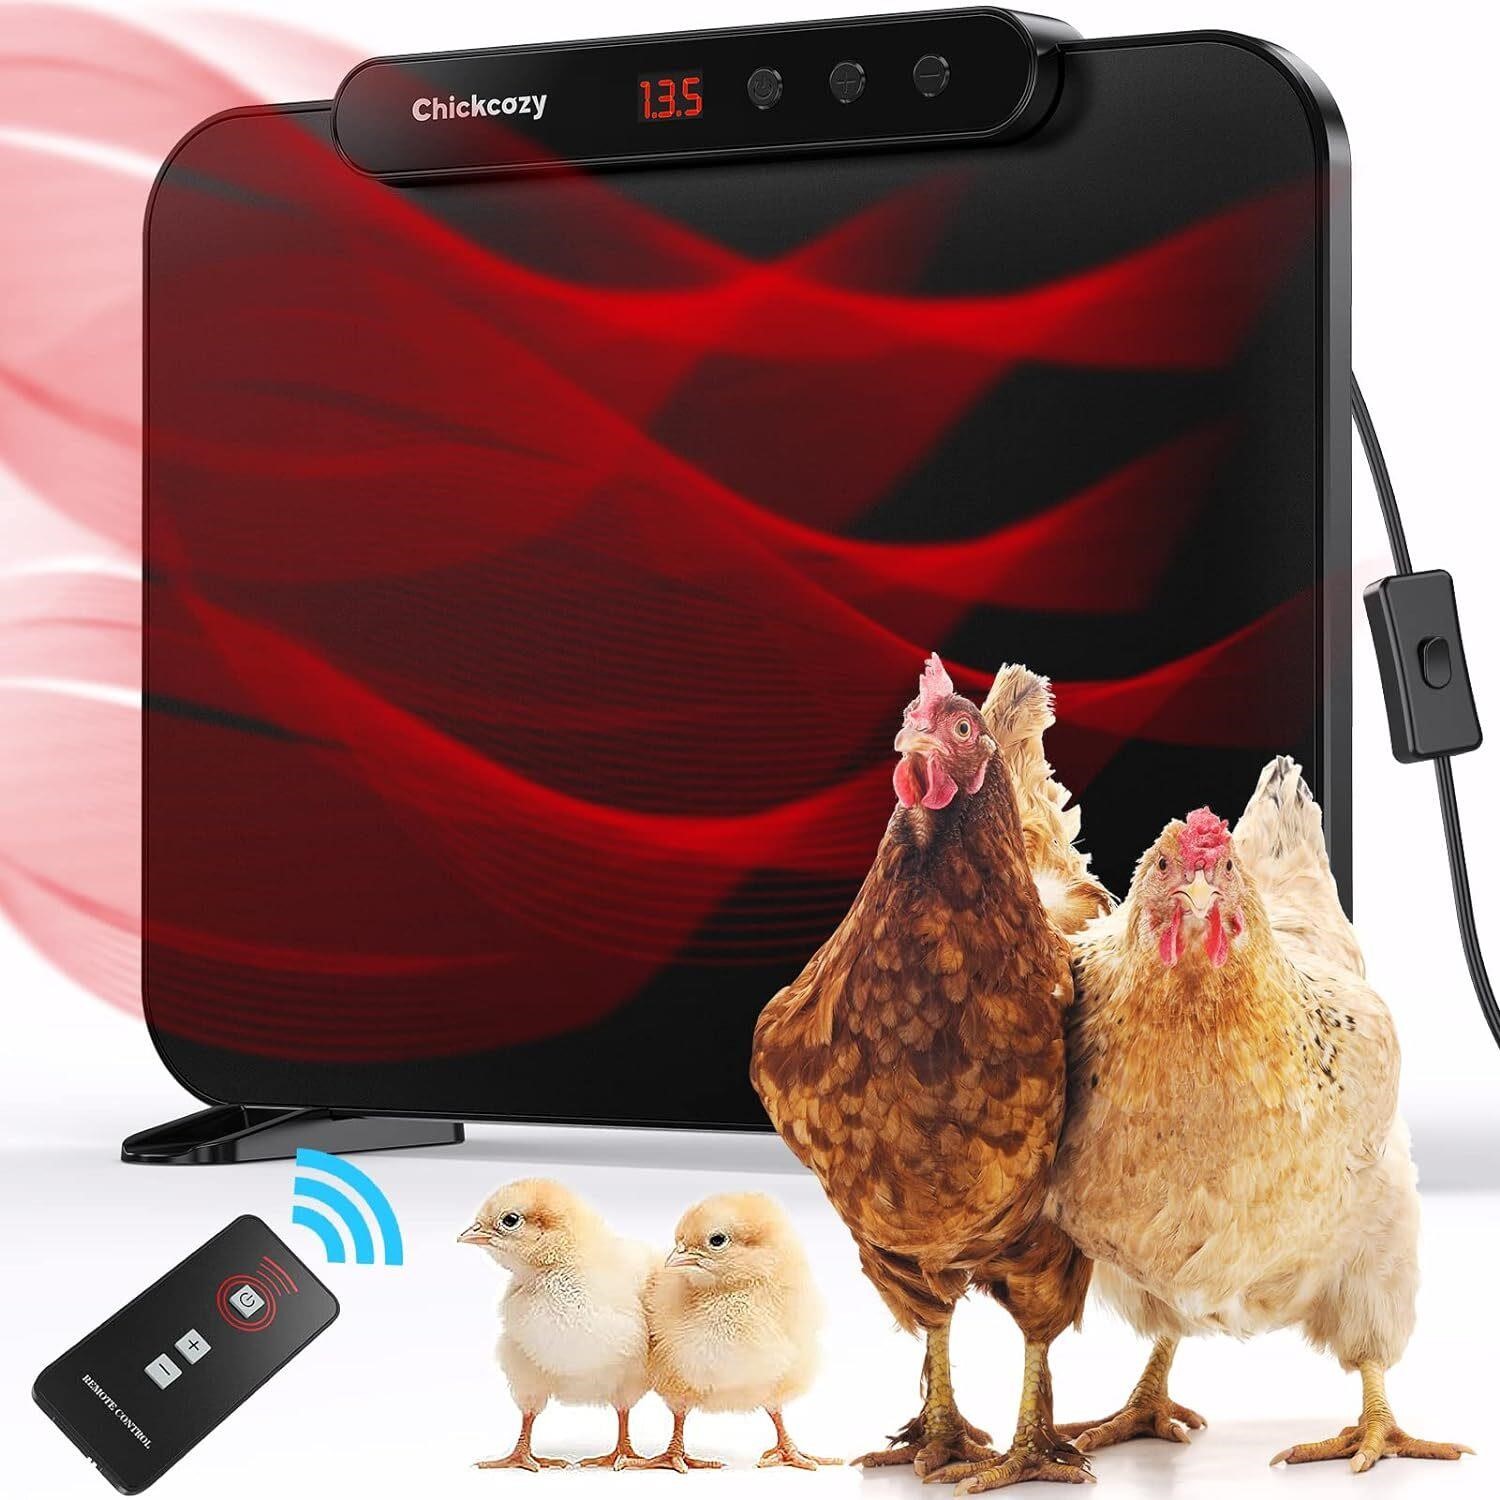 Chickcozy Chicken Coop Heater with Remote